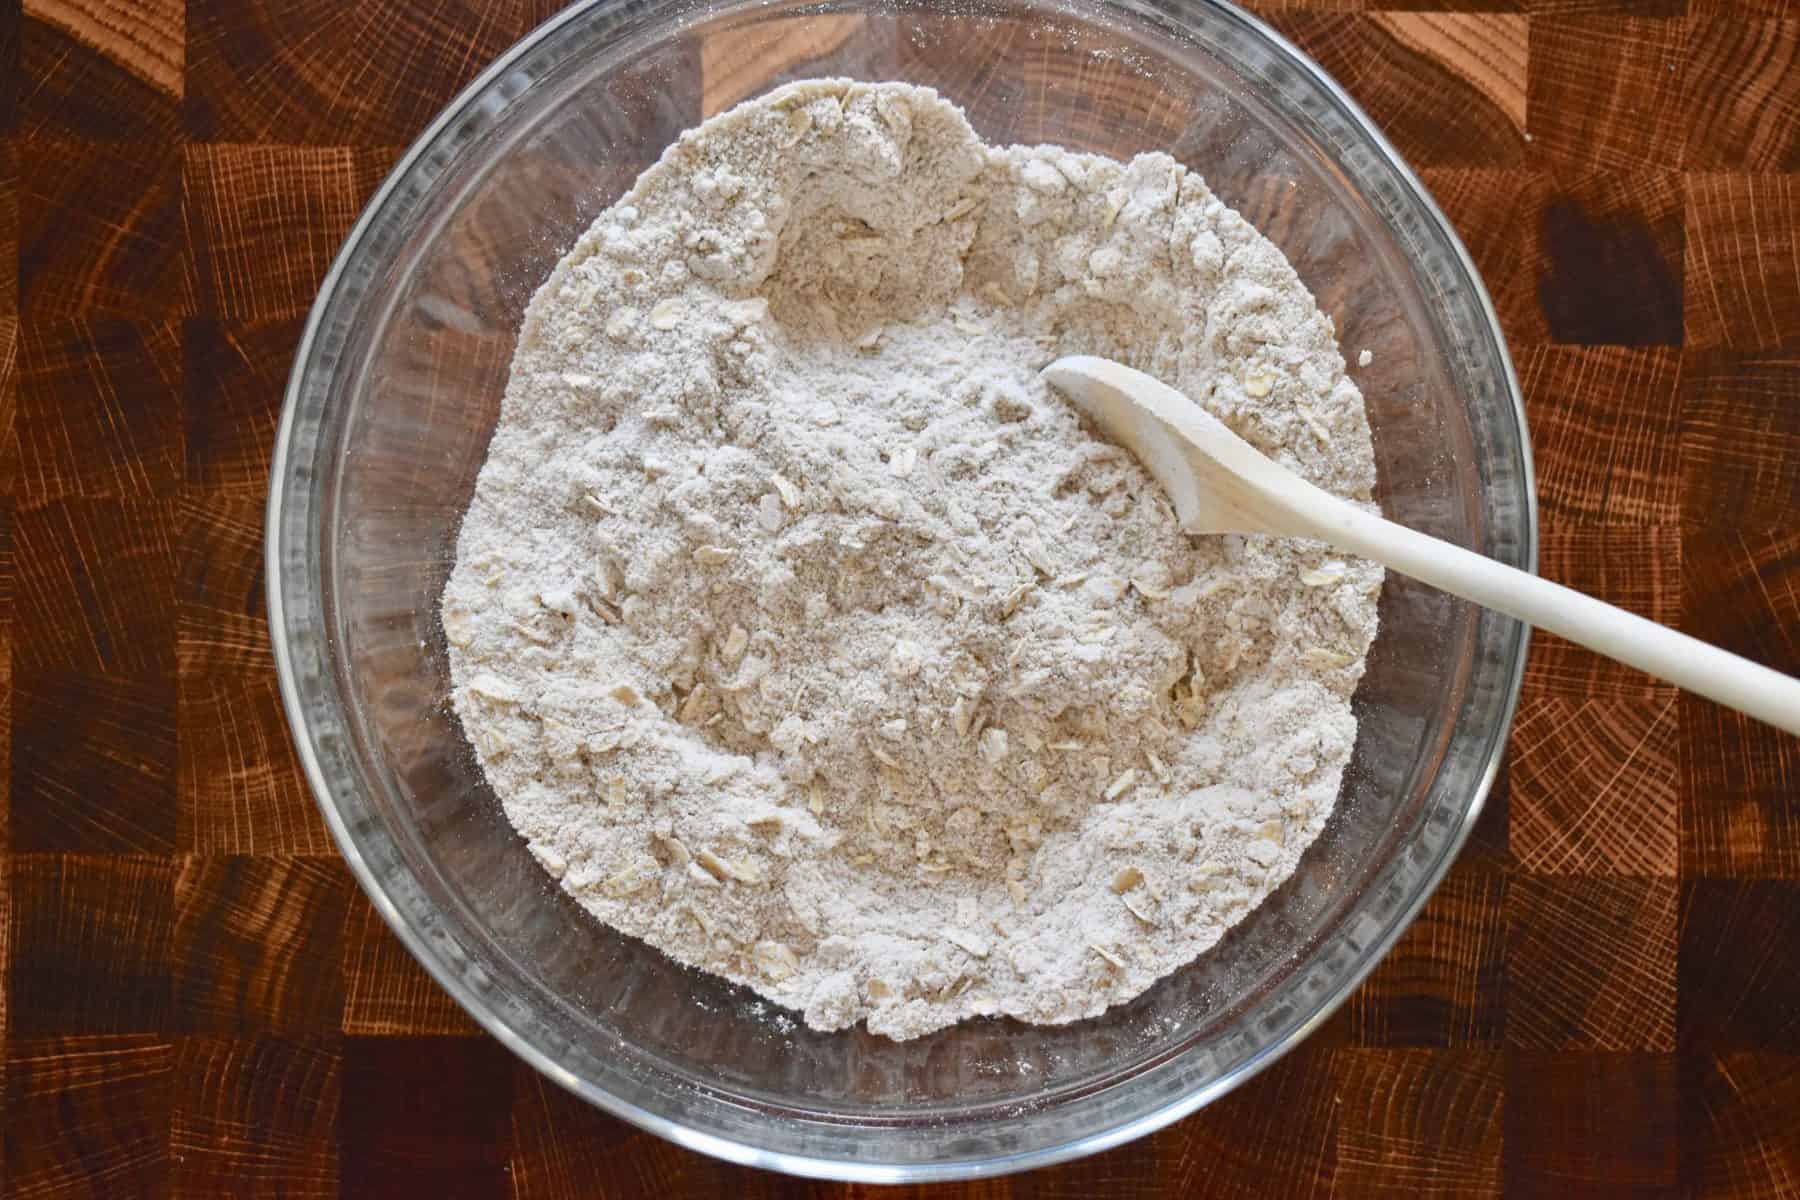 flour, oats, cinnamon, nutmeg, salt, and baking powder in a glass bowl. 